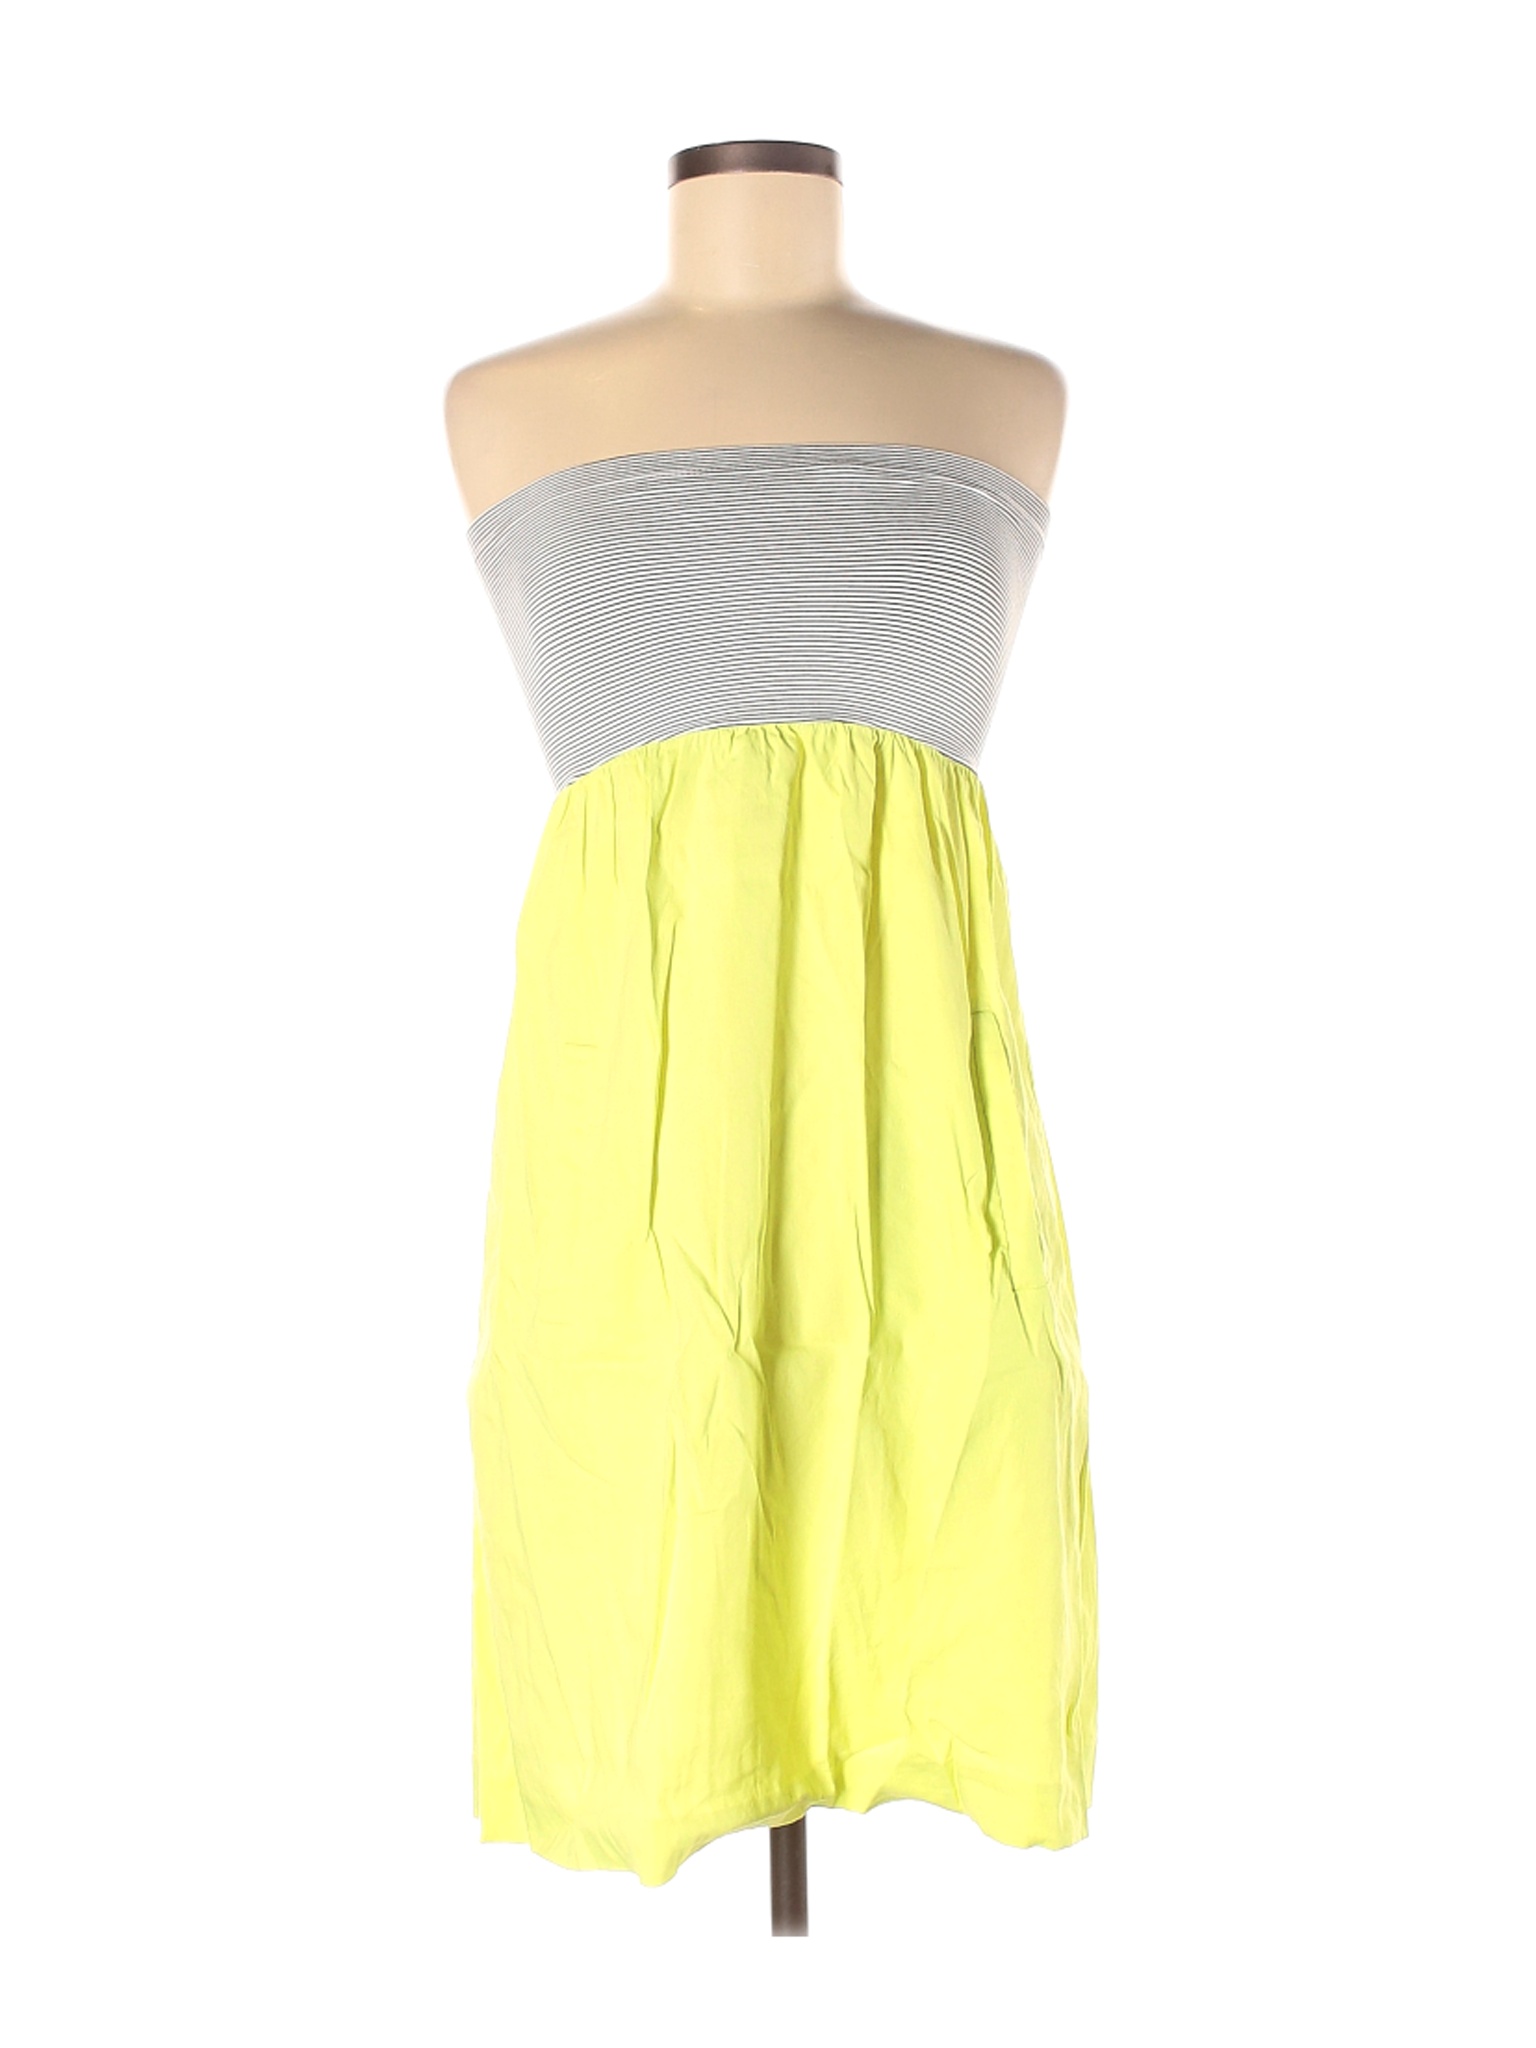 Theory Women Yellow Casual Dress One Size | eBay